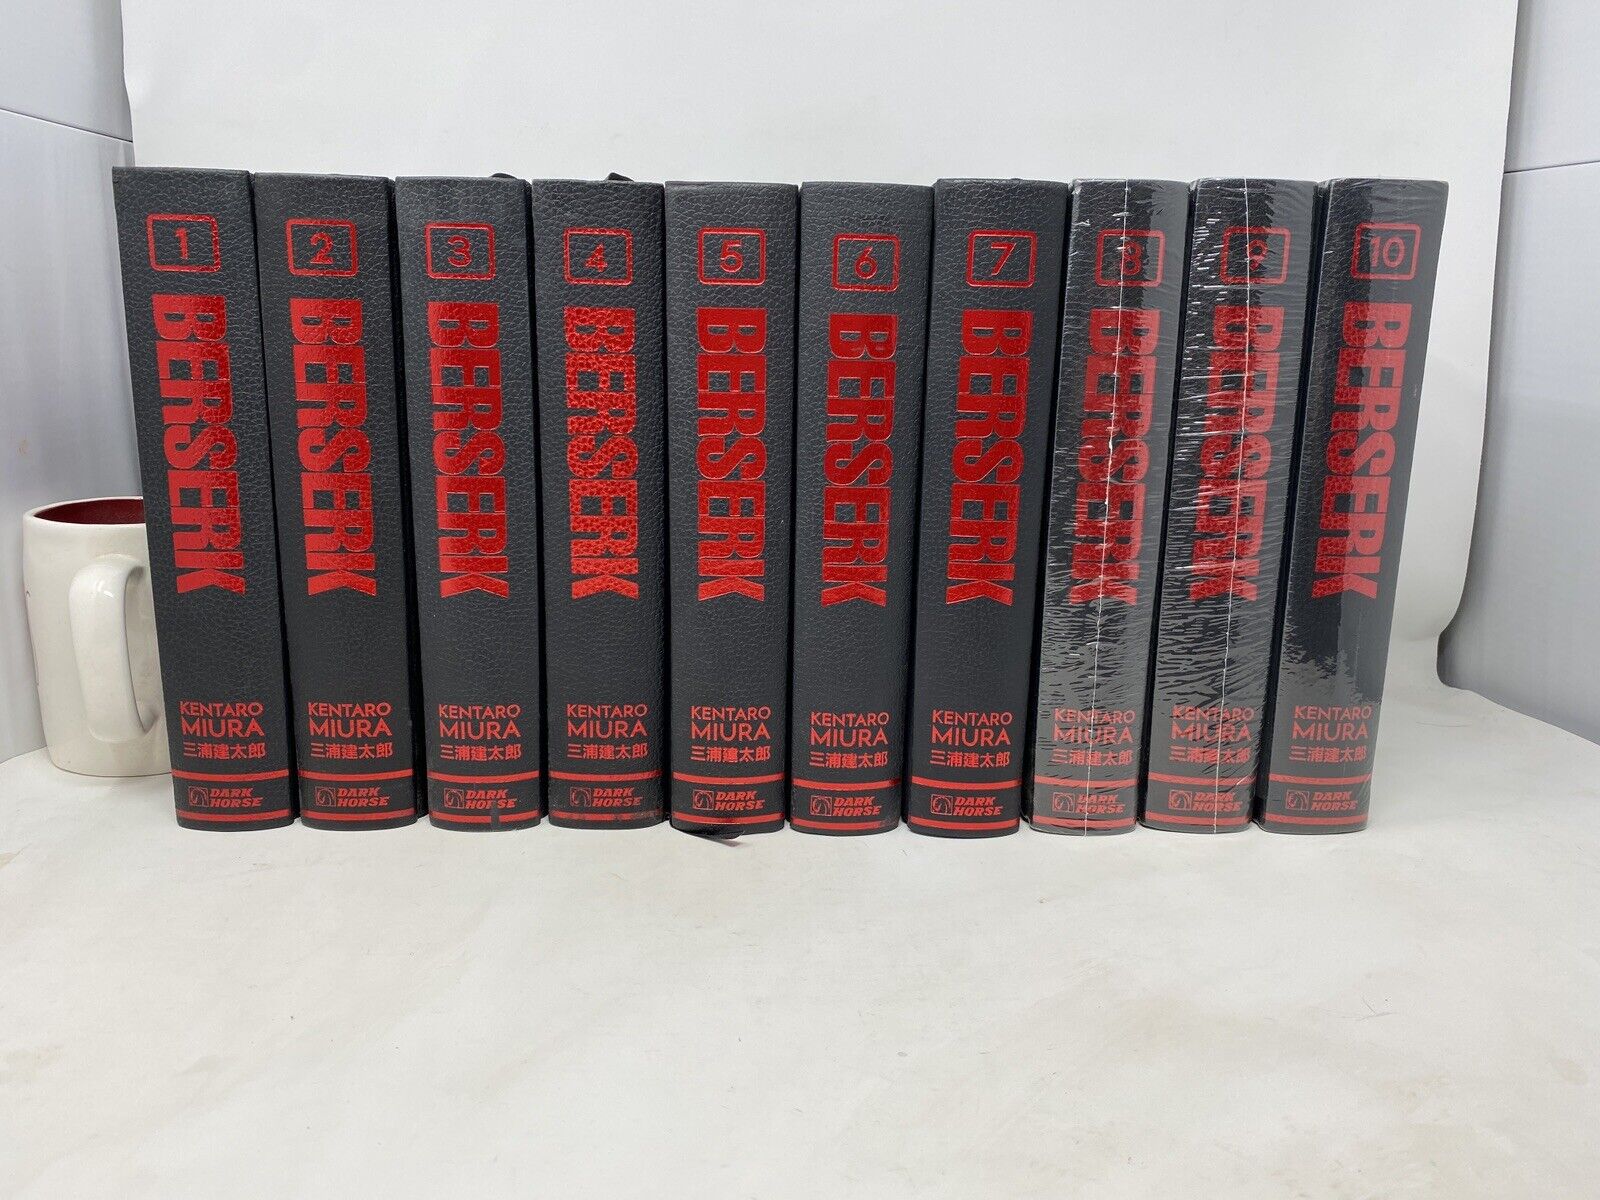 Kentaro Miura - BERSERK: Deluxe Edition Manga Omnibus Vol 1-10 (Hardcover)